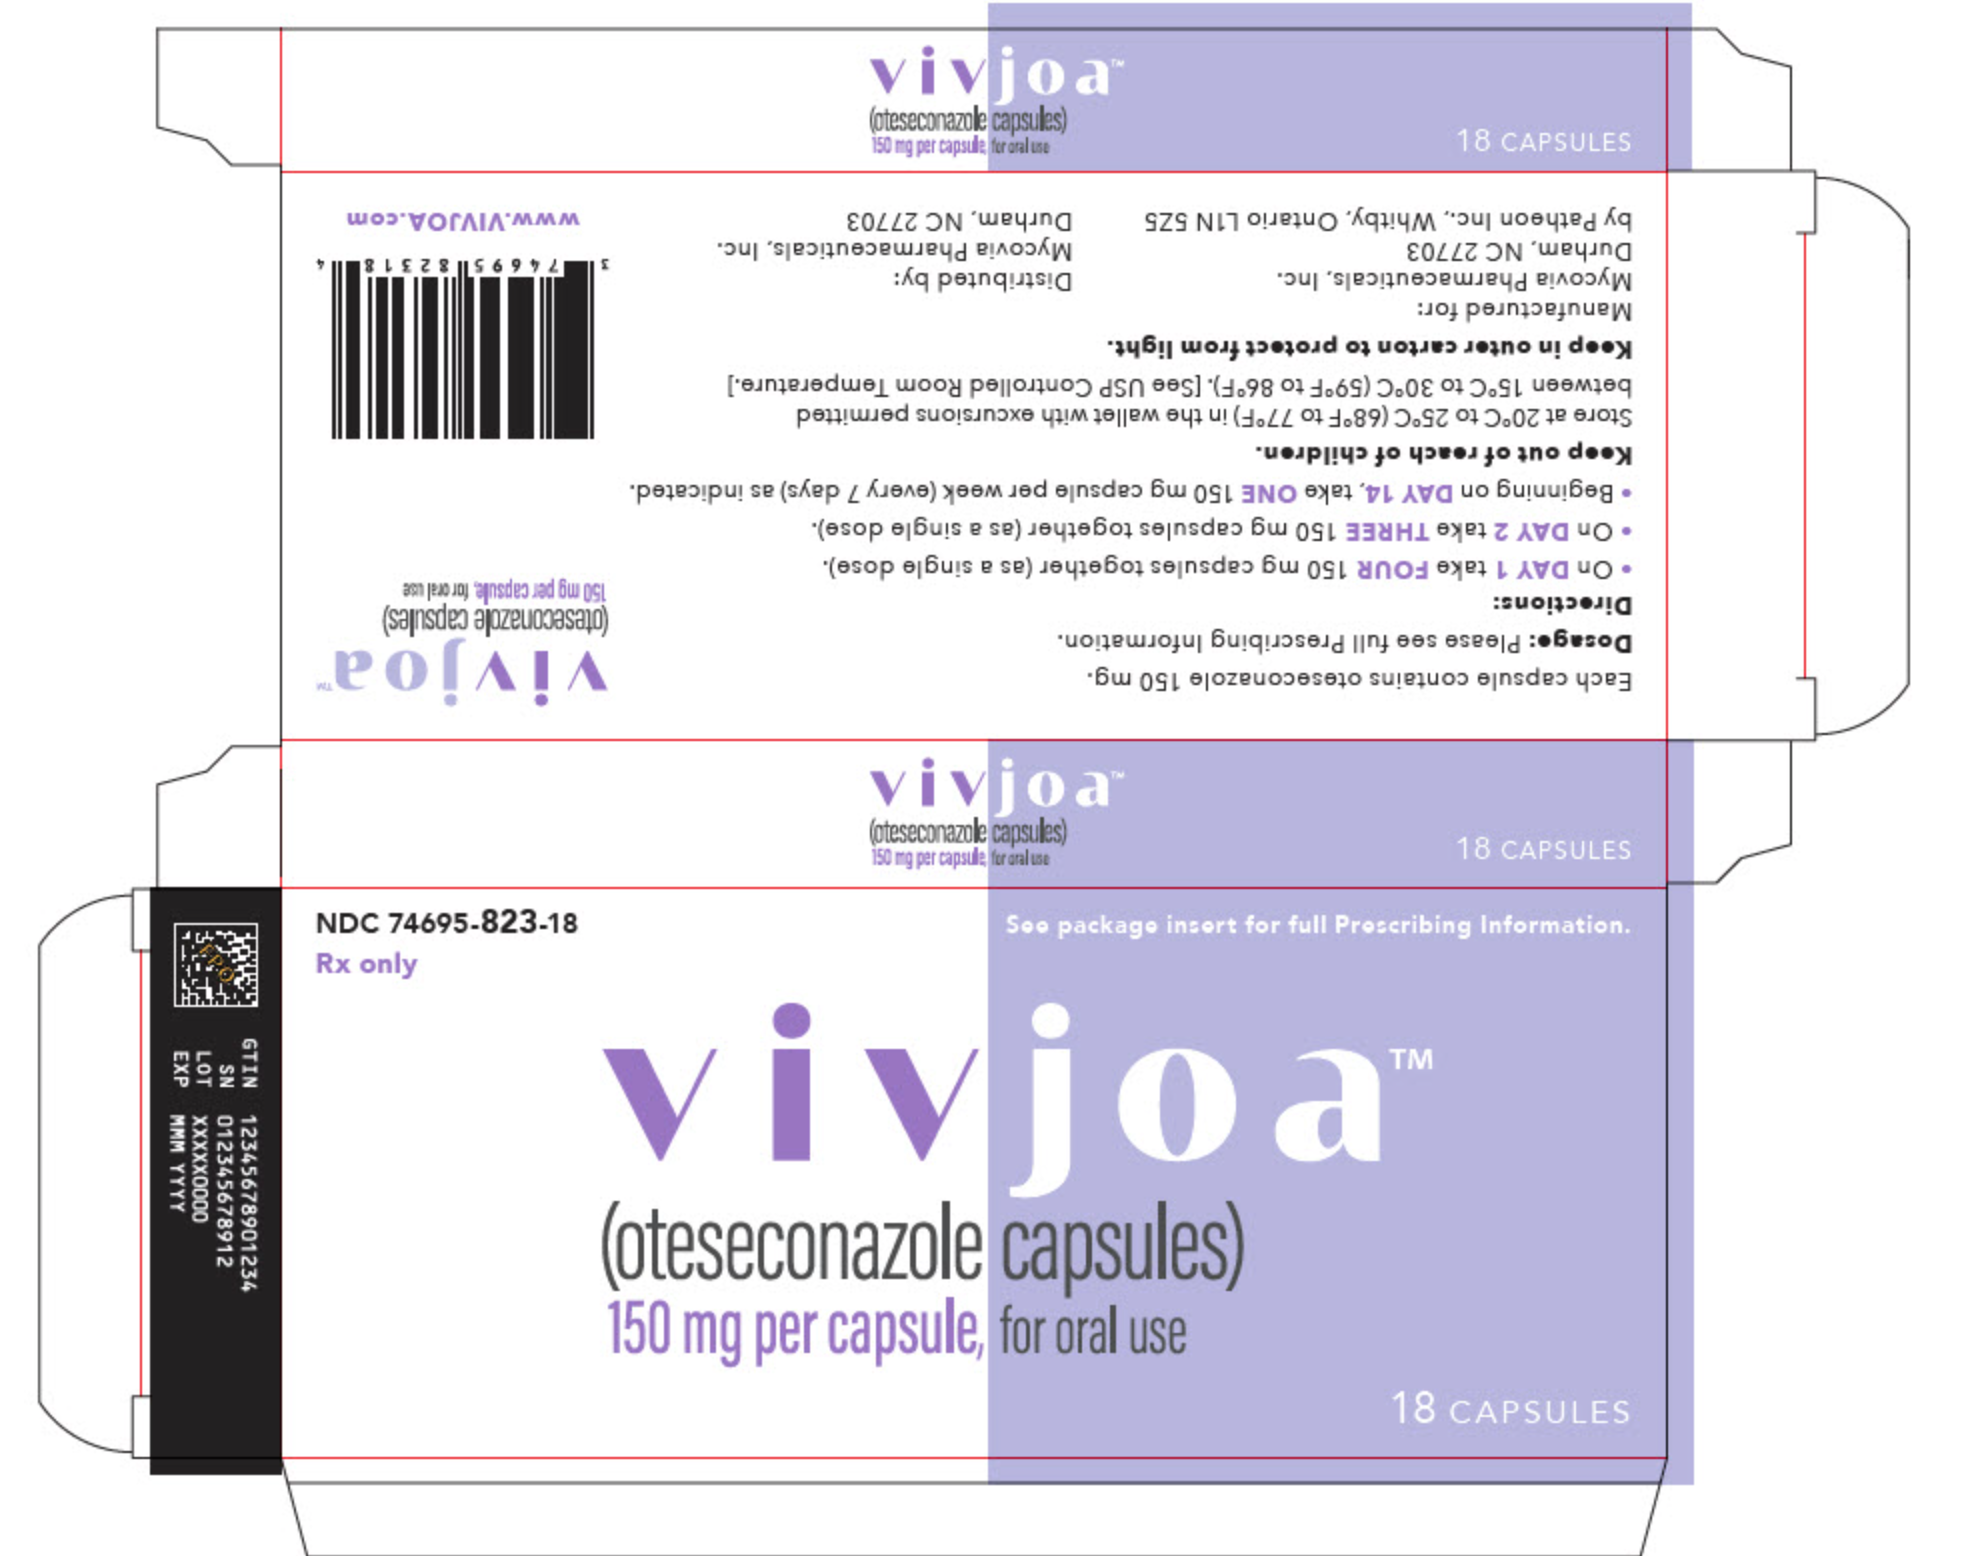 File:VIVJOA label3.png